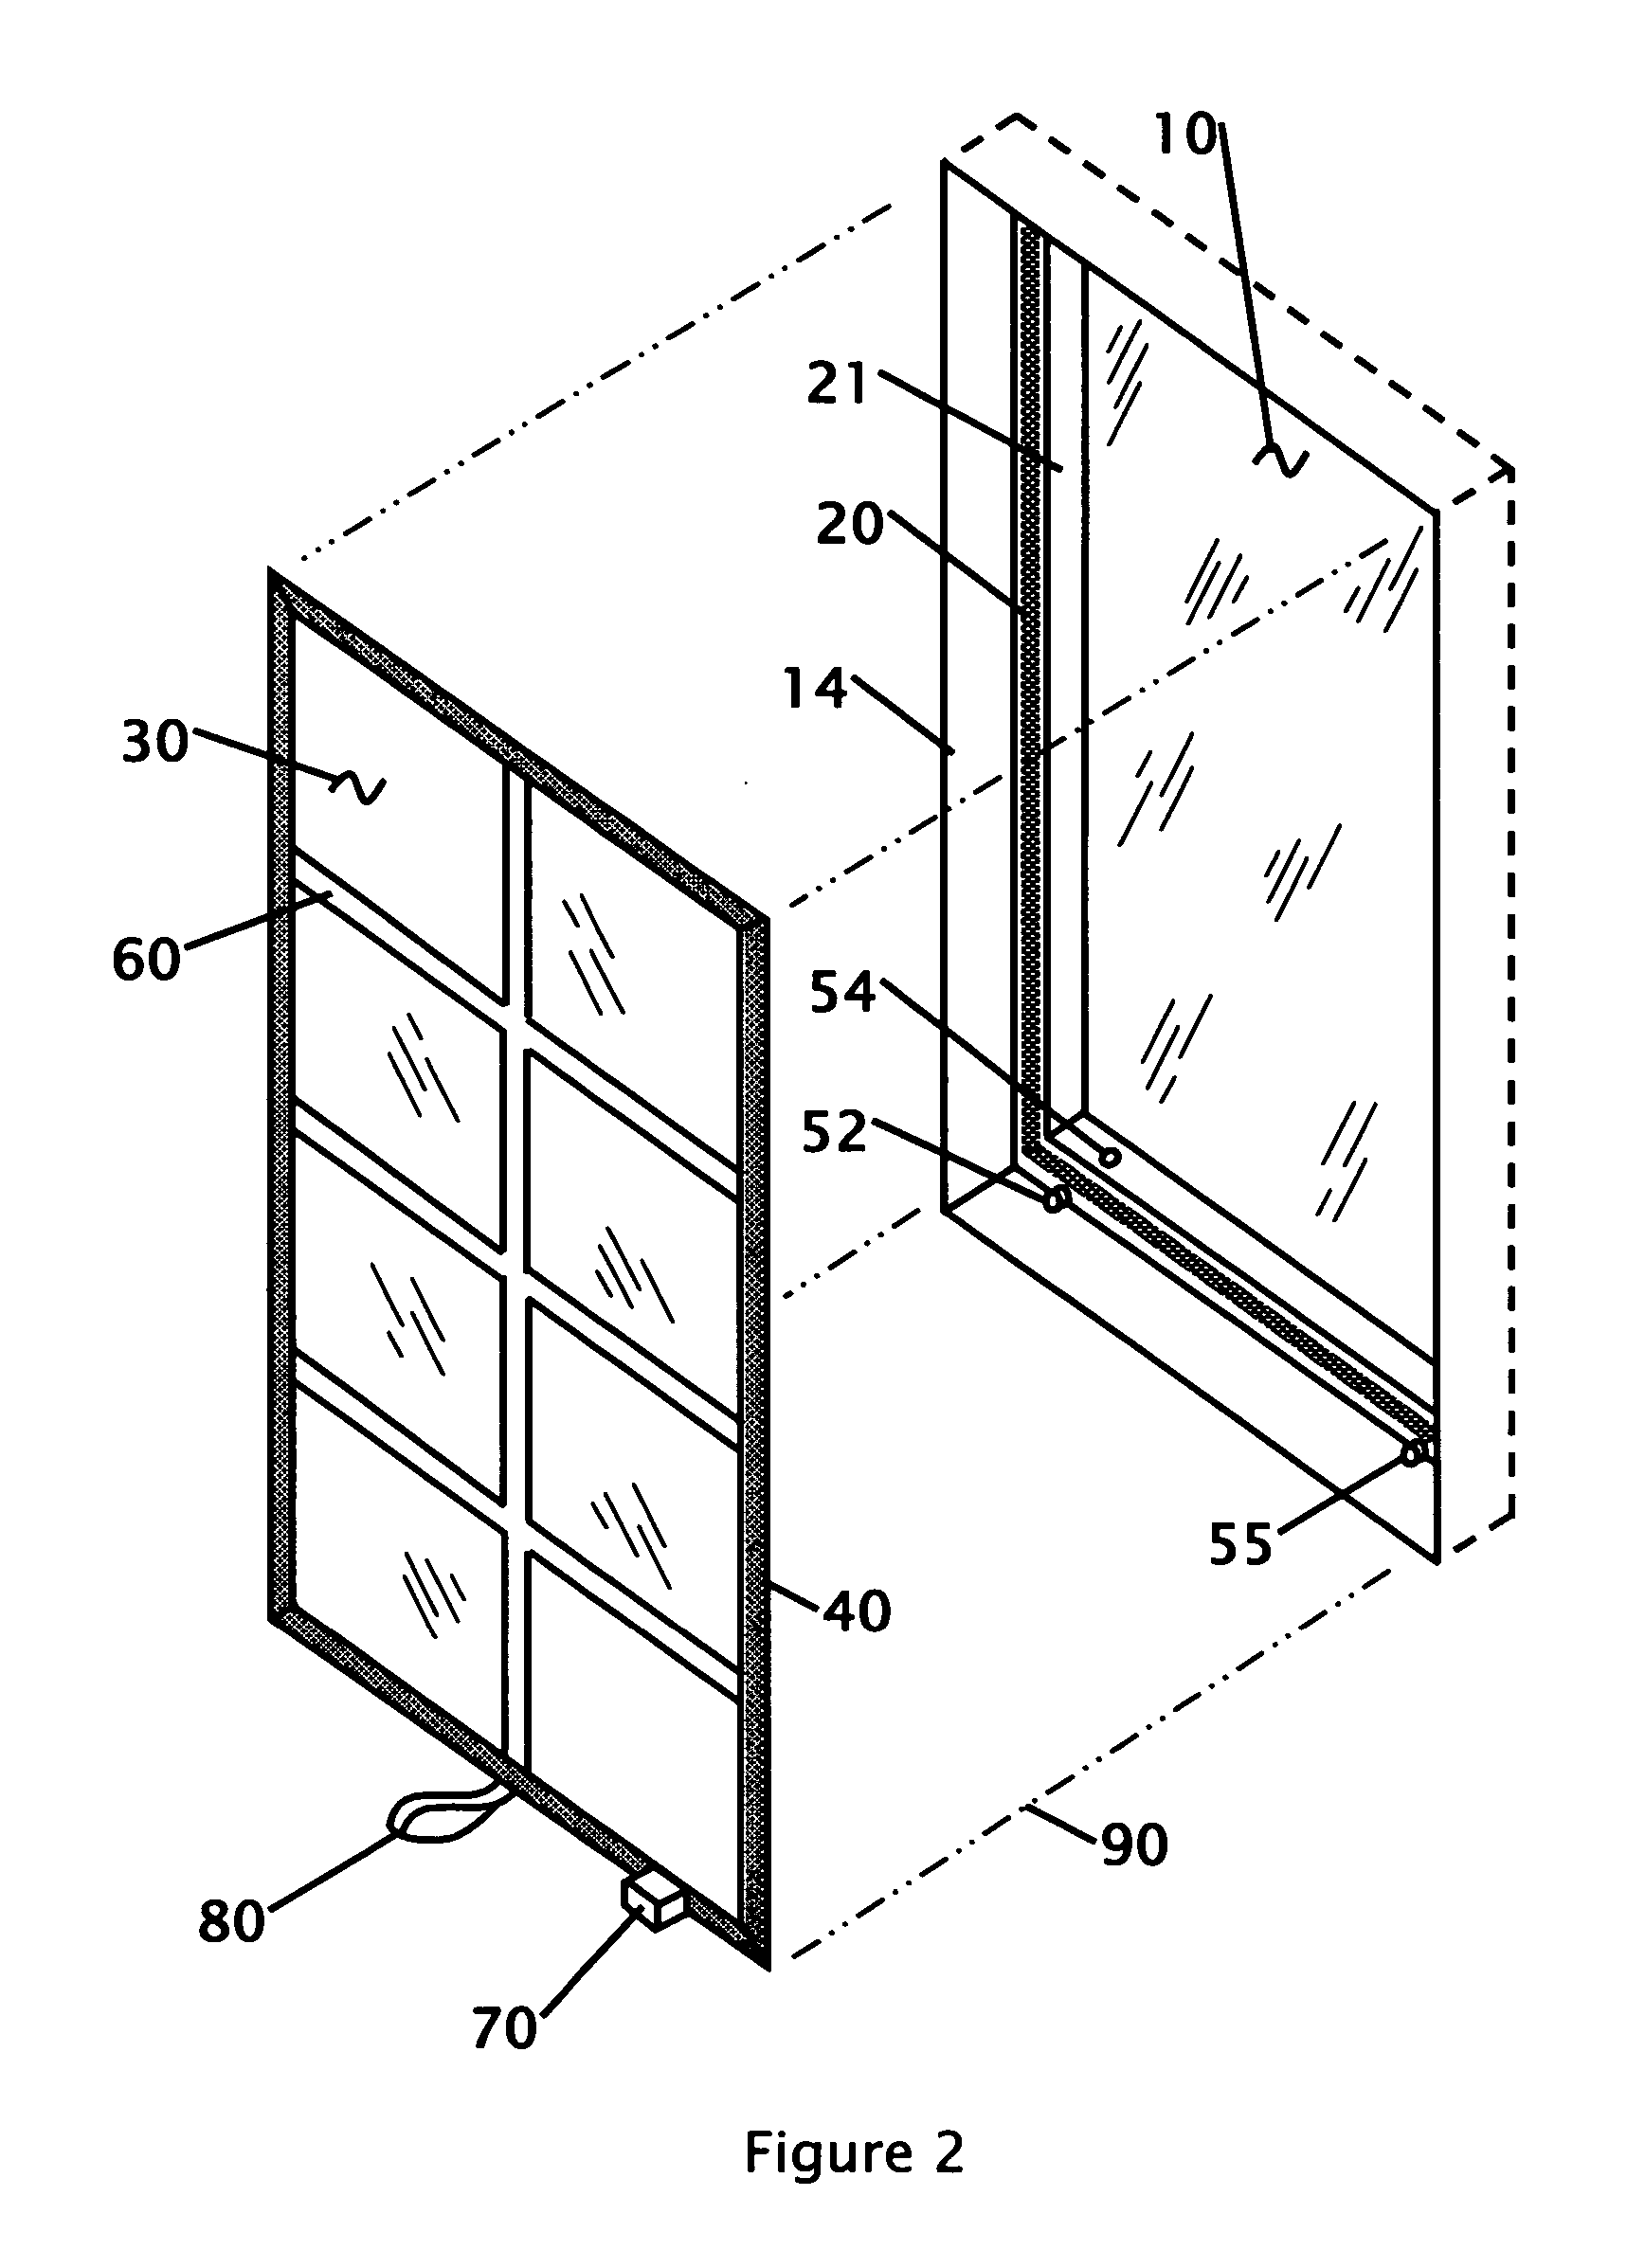 Secondary window with vacuum valve and alarm